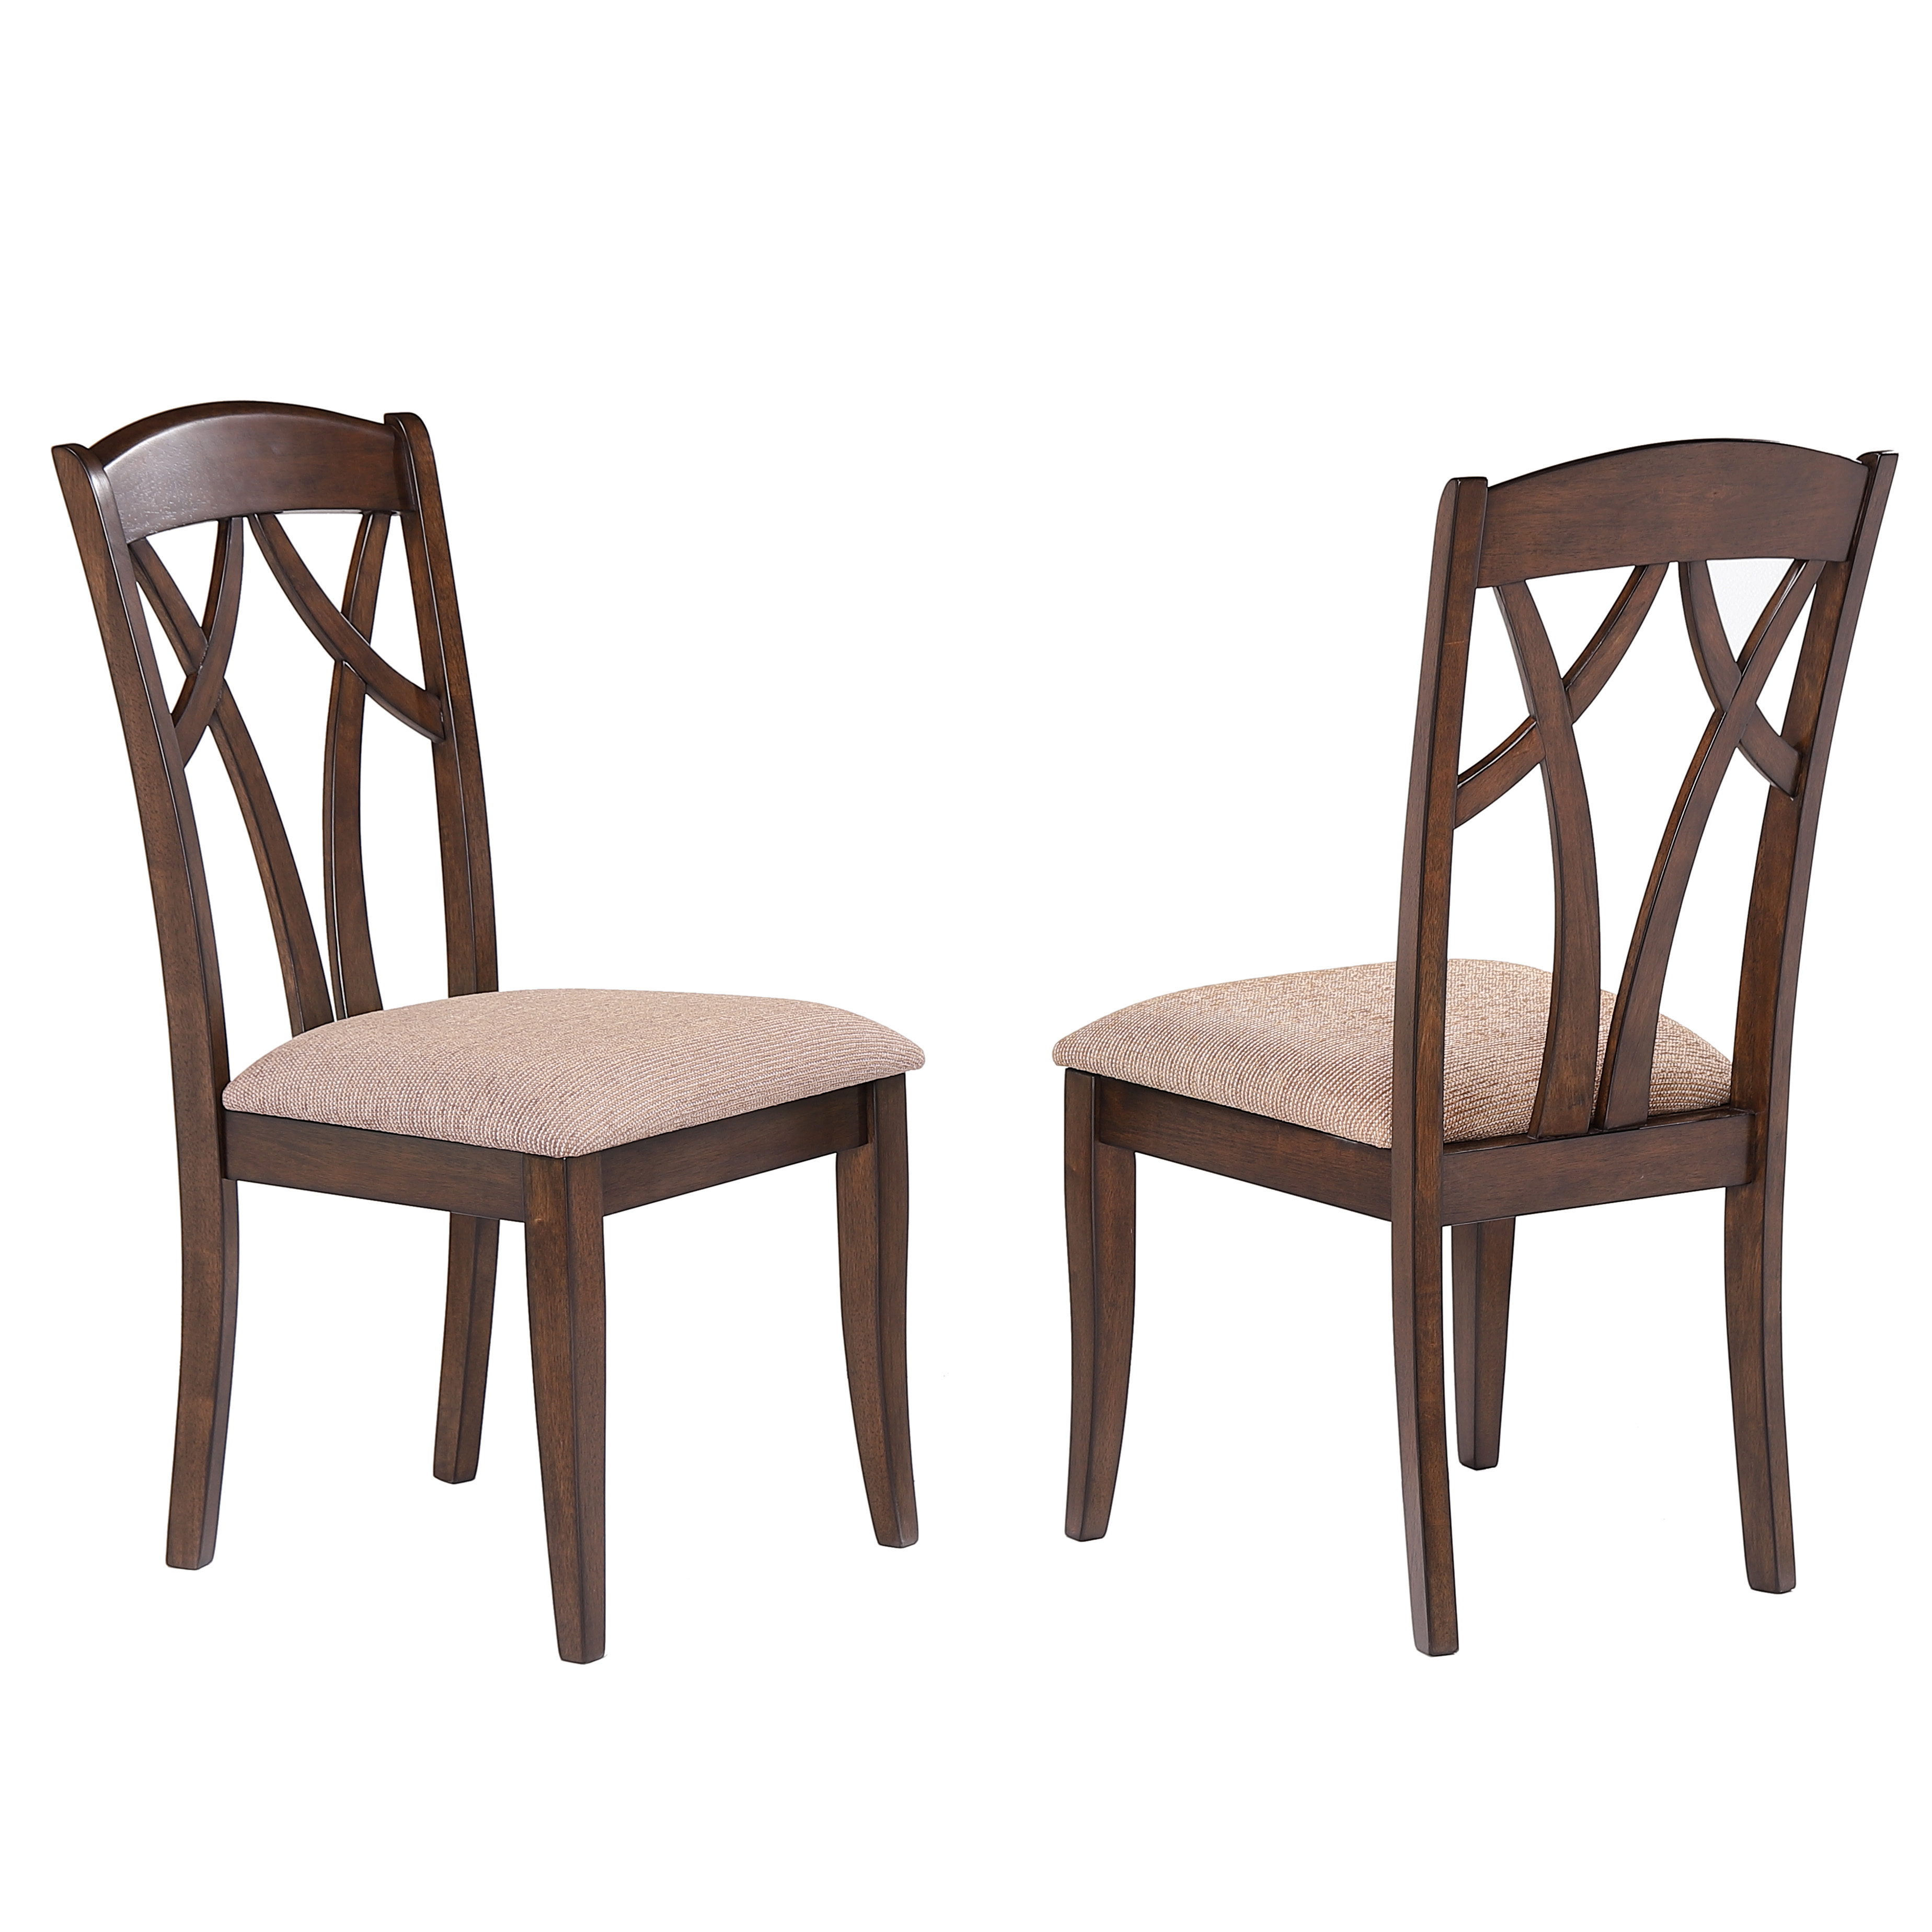 Tormund Dining Chairs - Set of 2